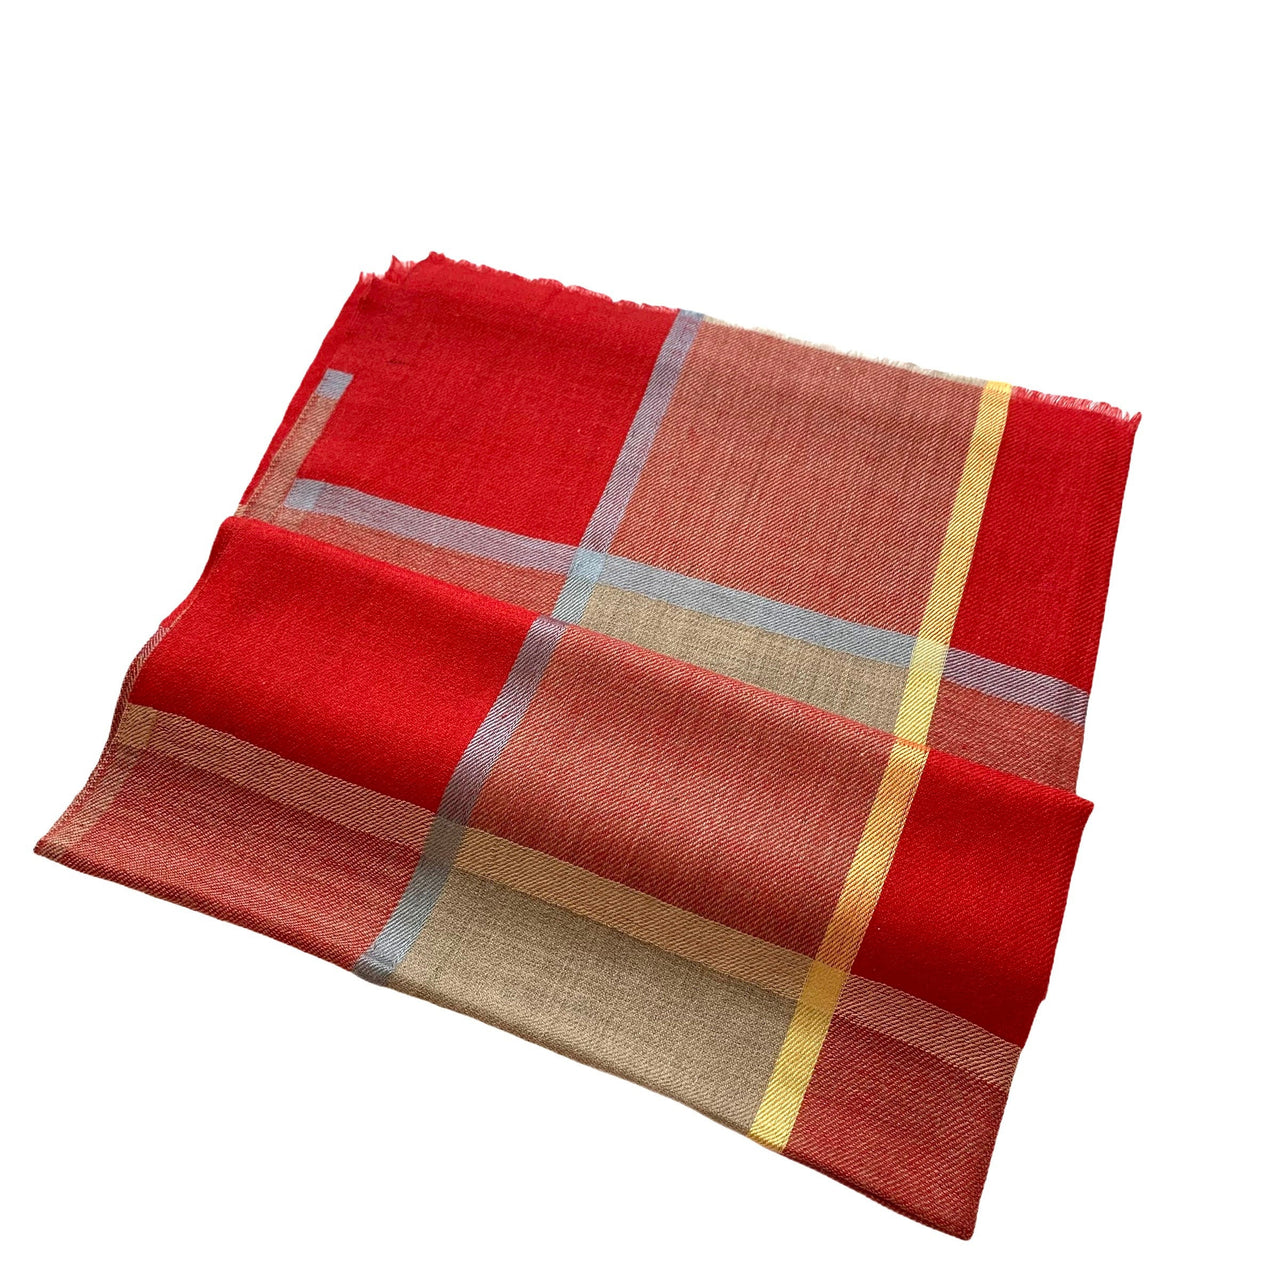 Cashmere Silk  Red/Beige Unisex Scarf/Shawl/Wrap/Stole 28x76”inches